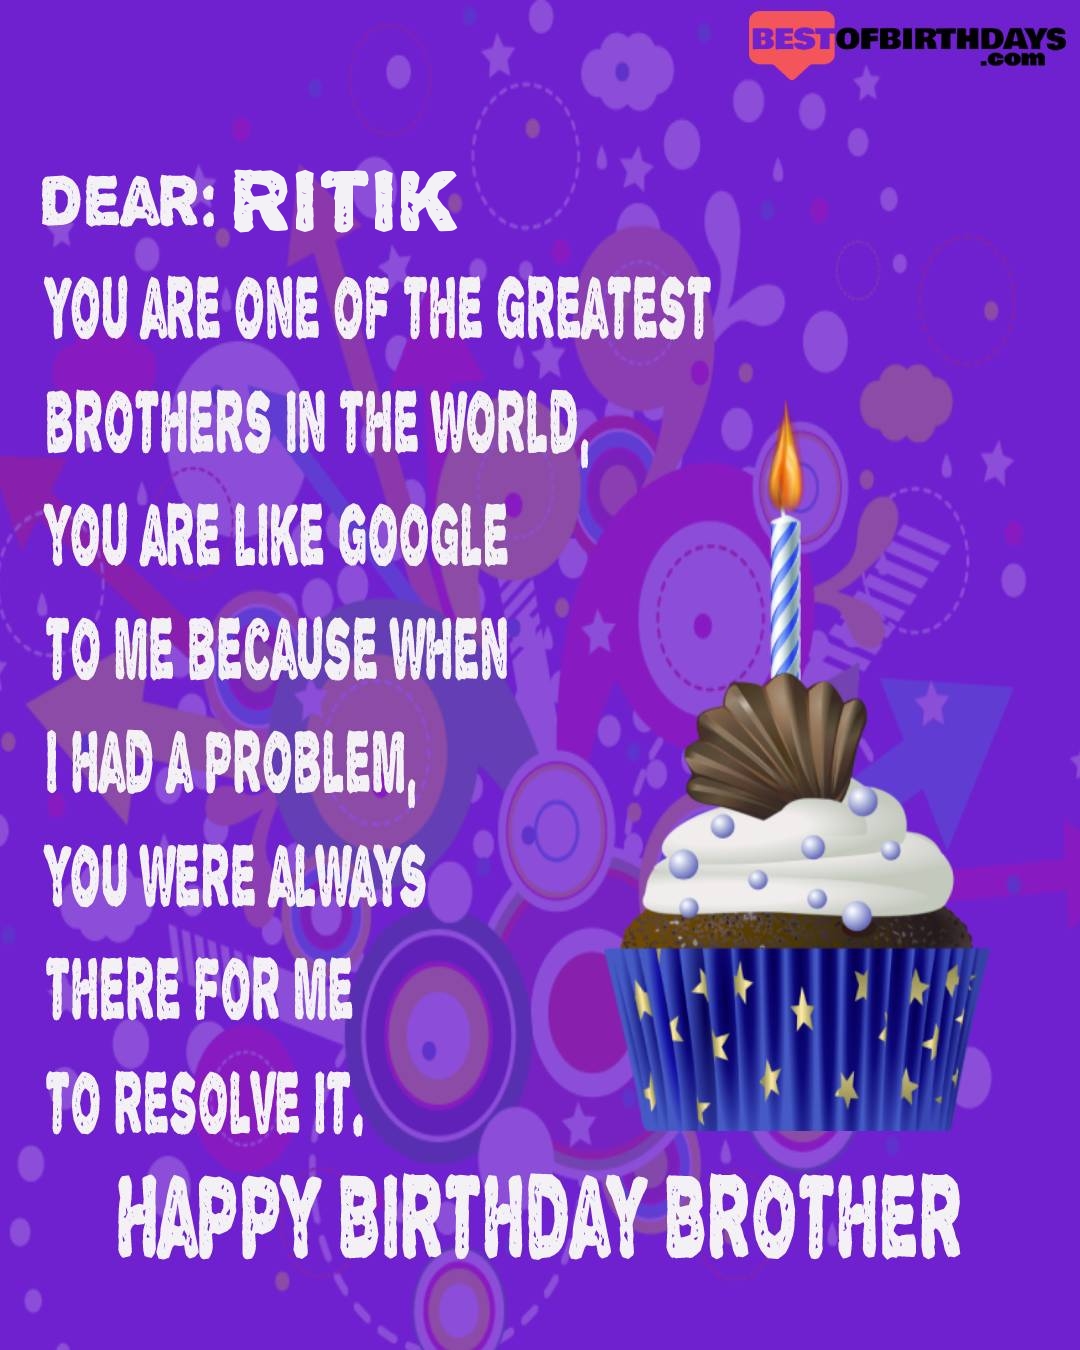 Happy birthday ritik bhai brother bro